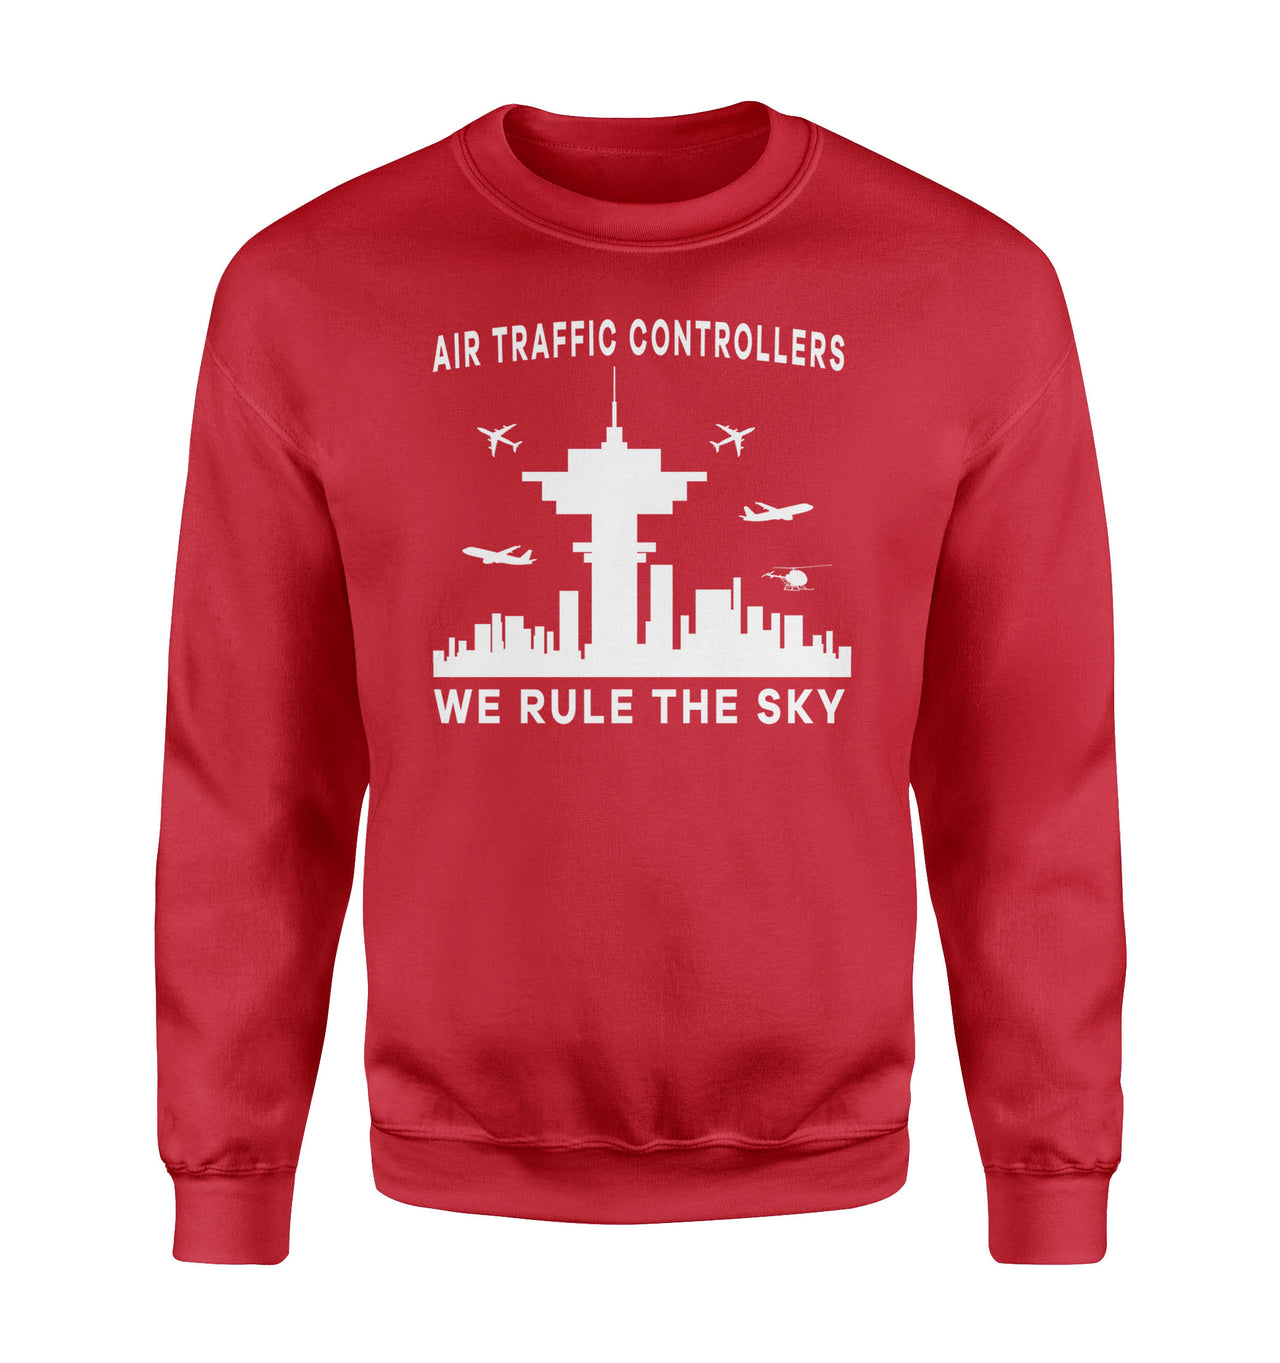 Air Traffic Controllers - We Rule The Sky Designed Sweatshirts